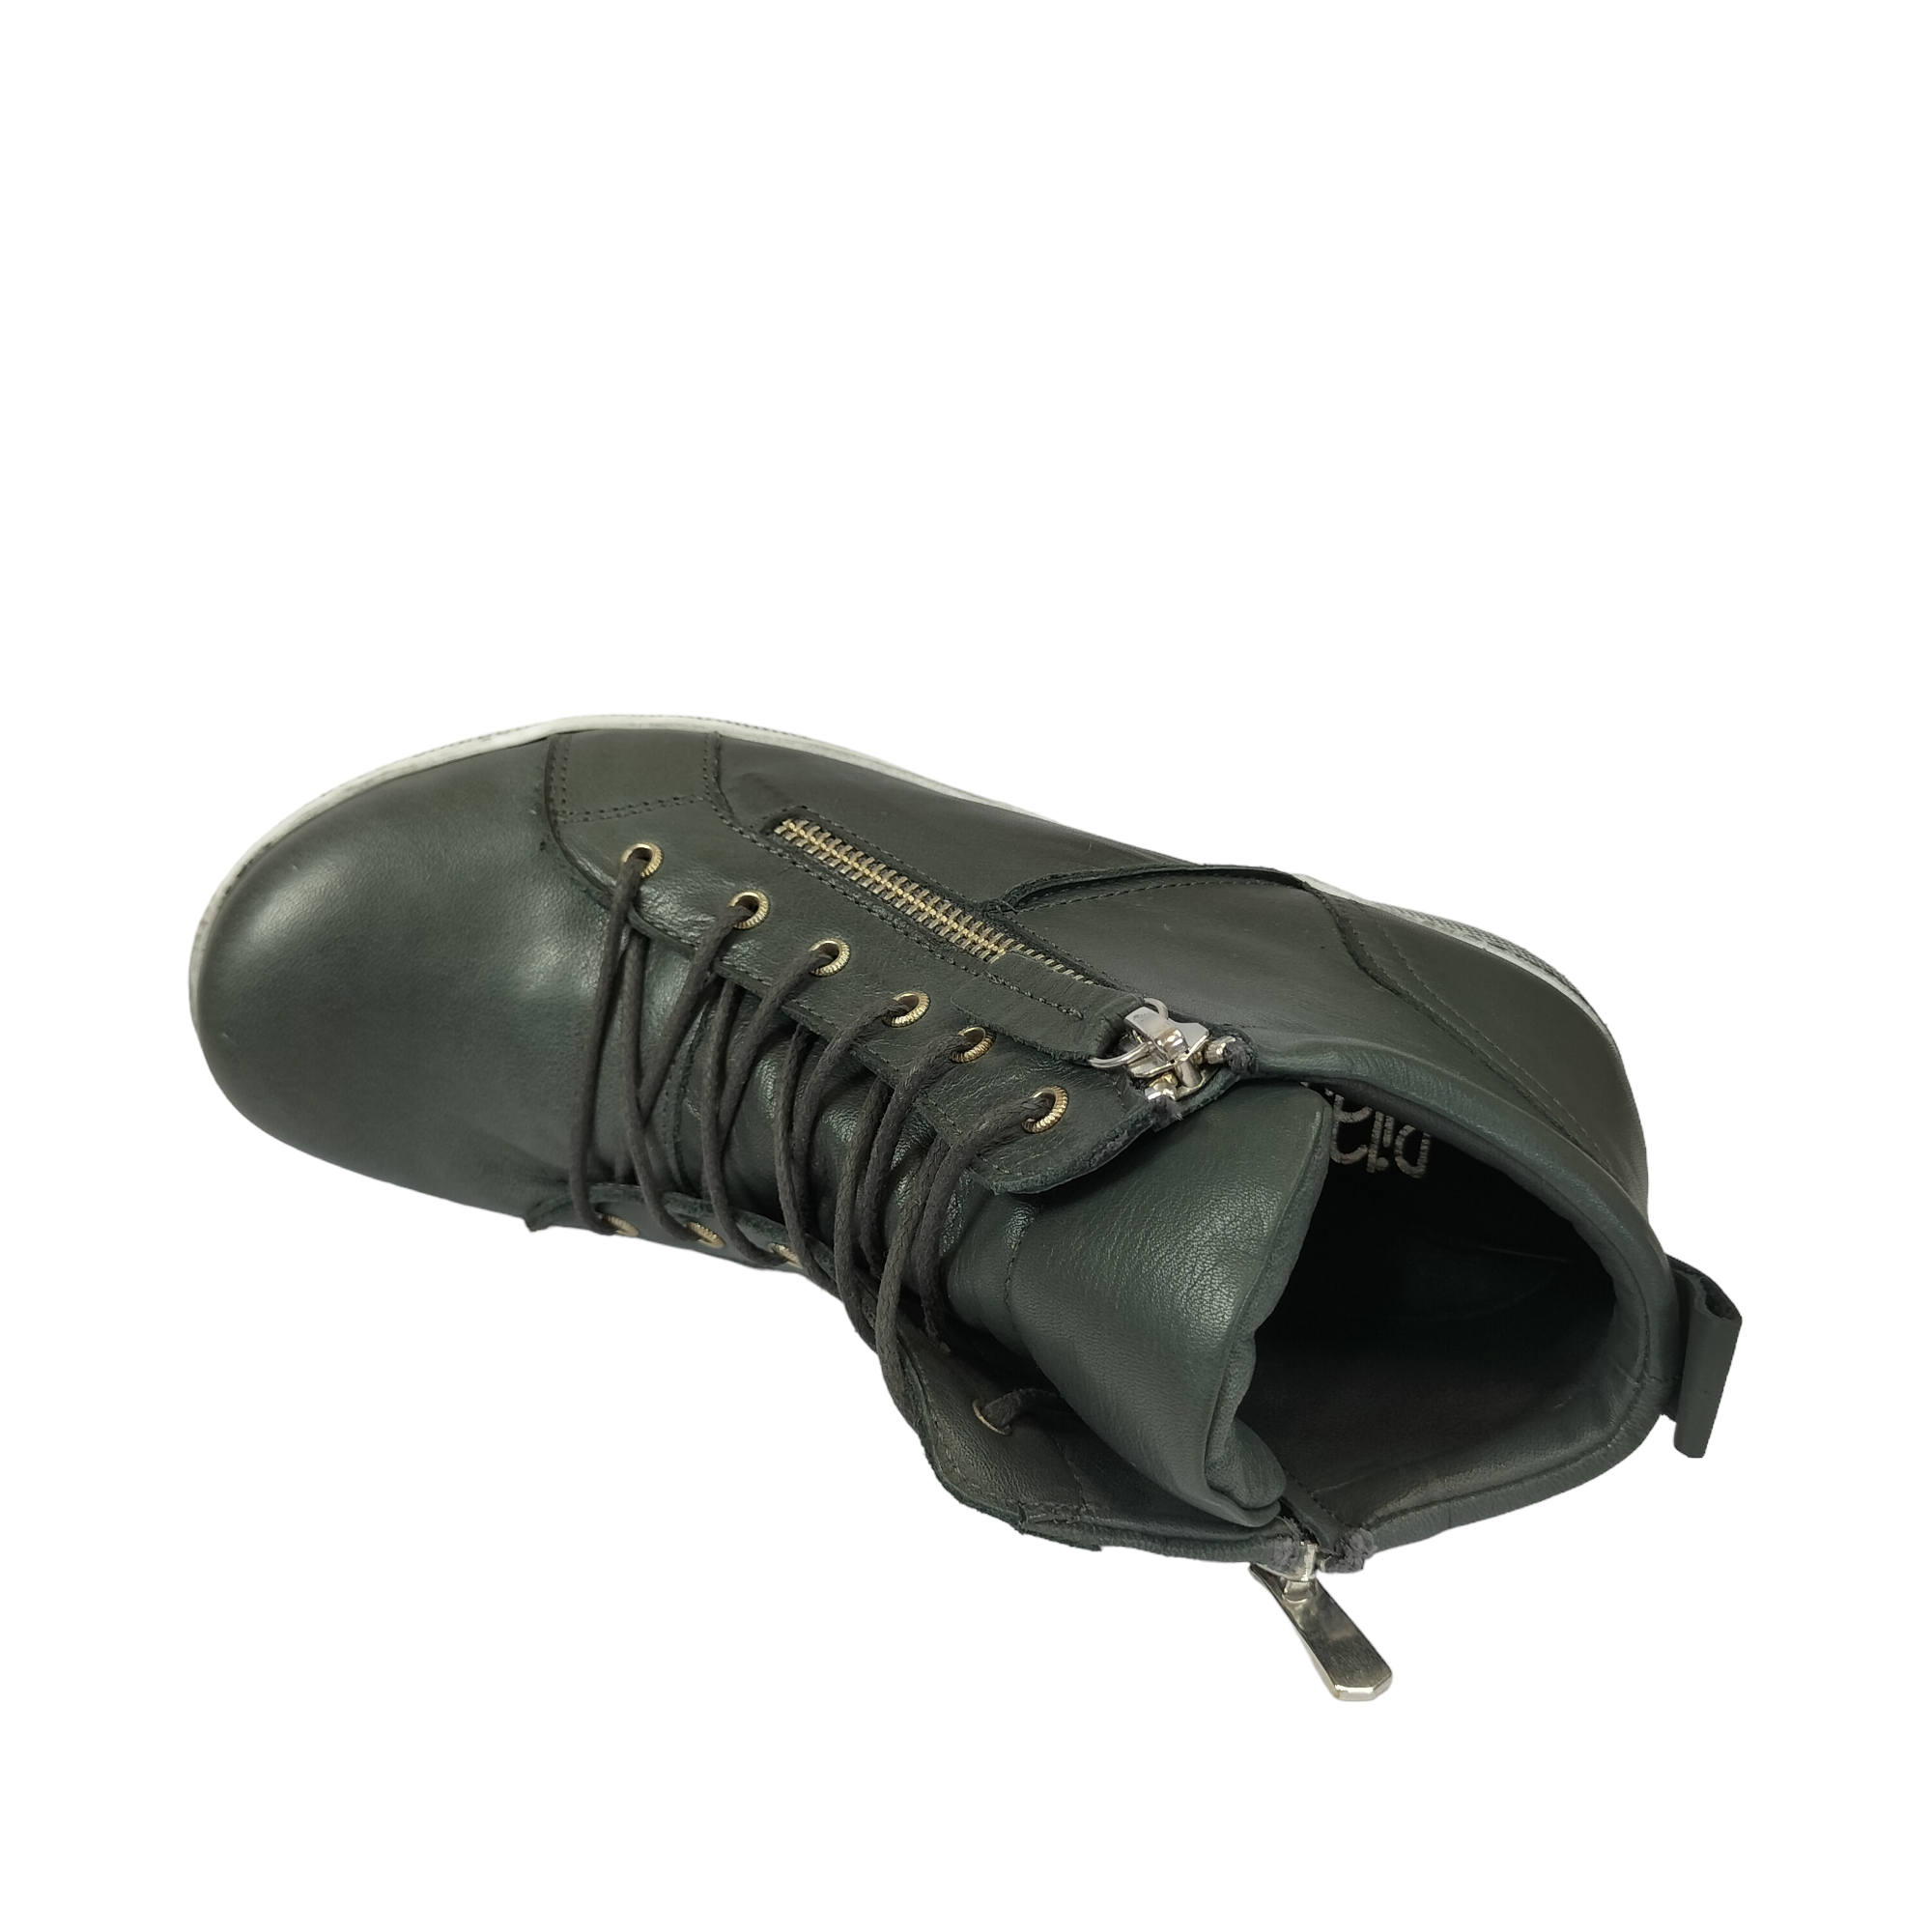 Tender - shoe&amp;me - Rilassare - Boot - Boots, Winter, Womens